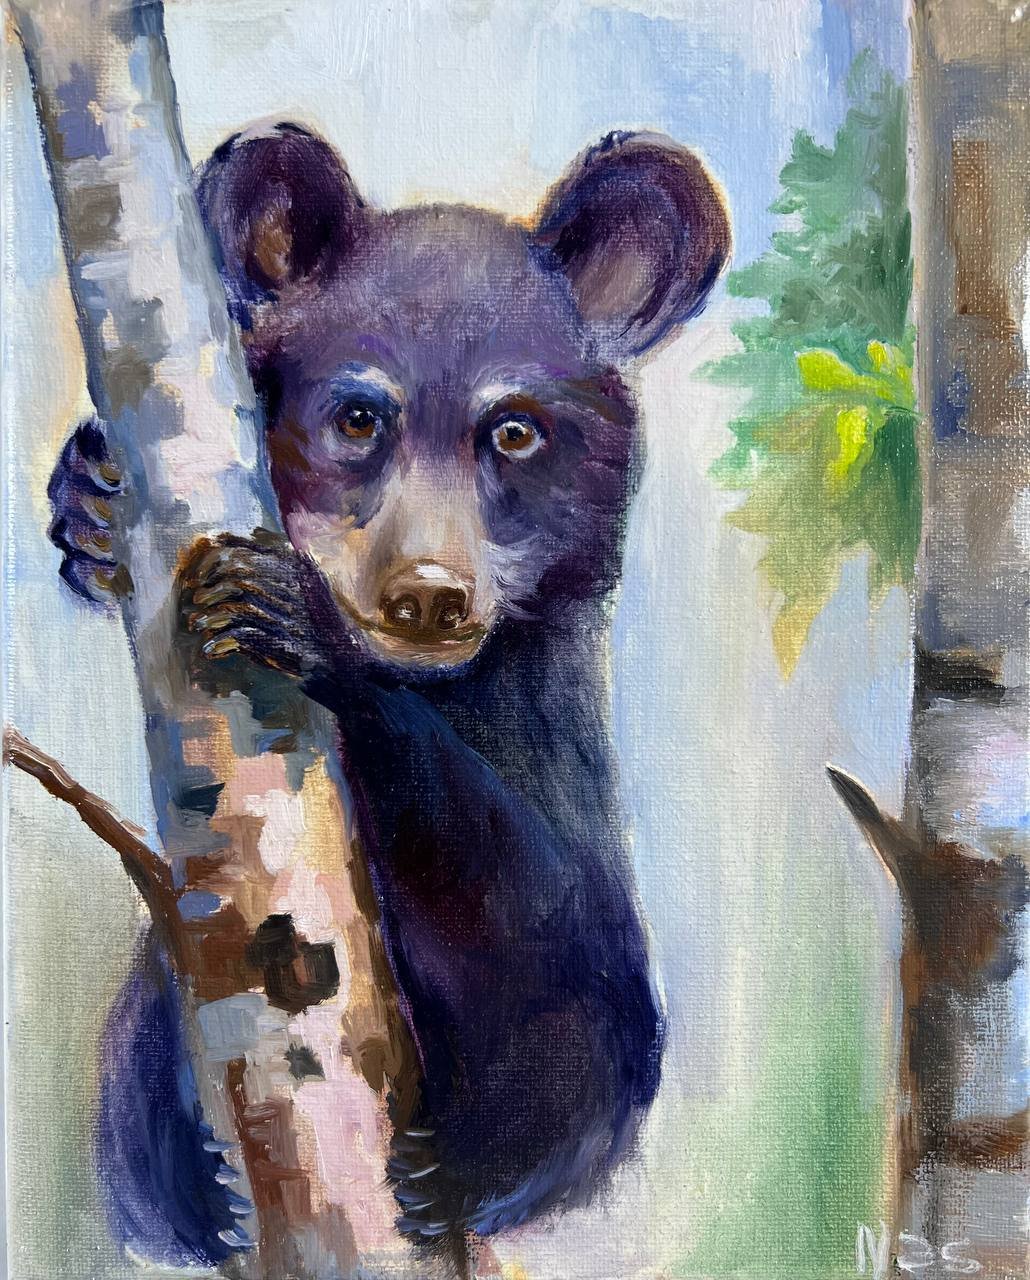 A Bear Cub in a Tree